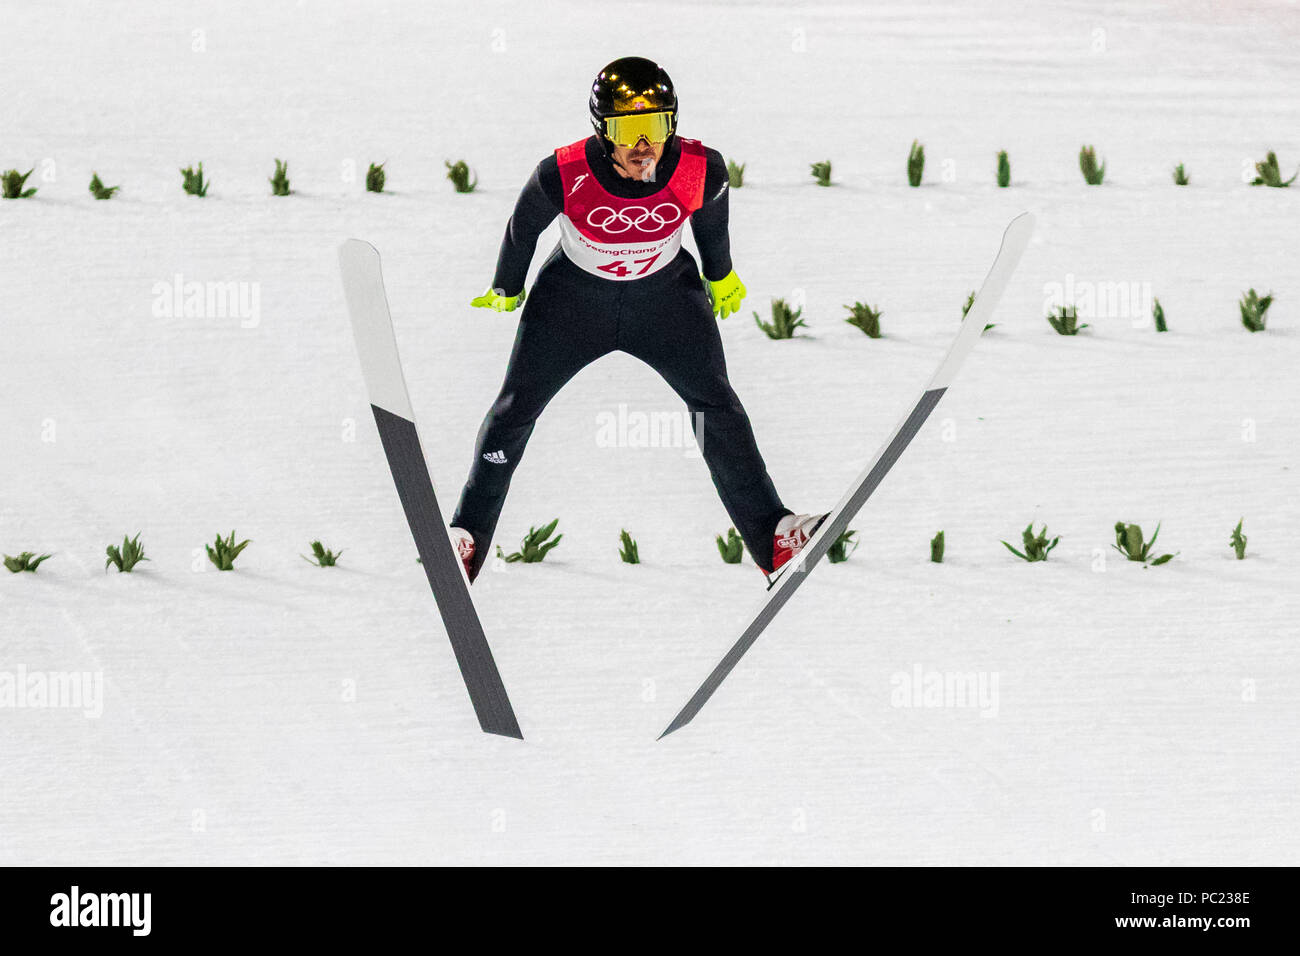 Andreas Stjernen (NOR) konkurrieren im Skispringen Herren Normalschanze Qualifikation bei den Olympischen Winterspielen PyeongChang 2018 Stockfoto